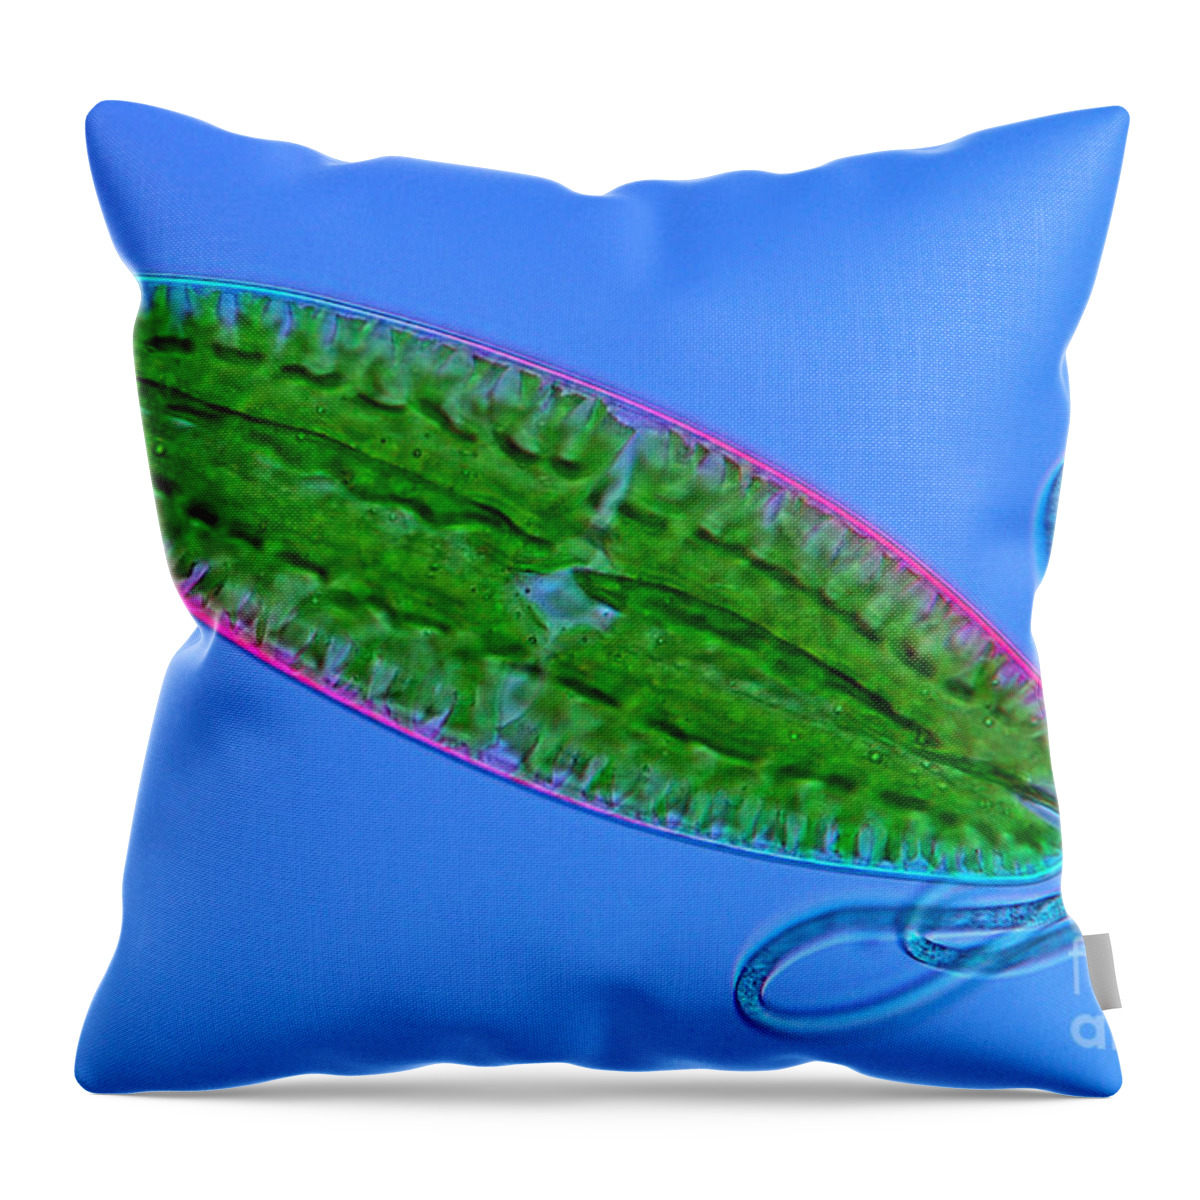 Netrium Throw Pillow featuring the photograph Netrium And Cyanobacteria, Lm by Marek Mis